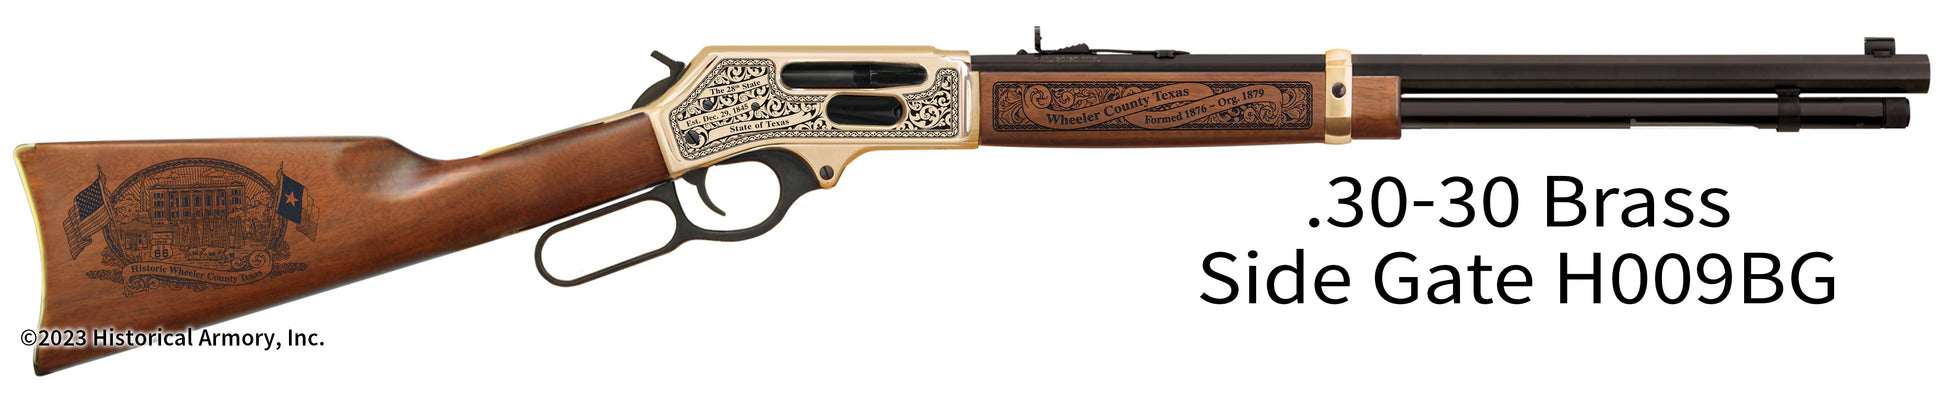 Wheeler County Texas History Engraved Henry .30-30 Rifle